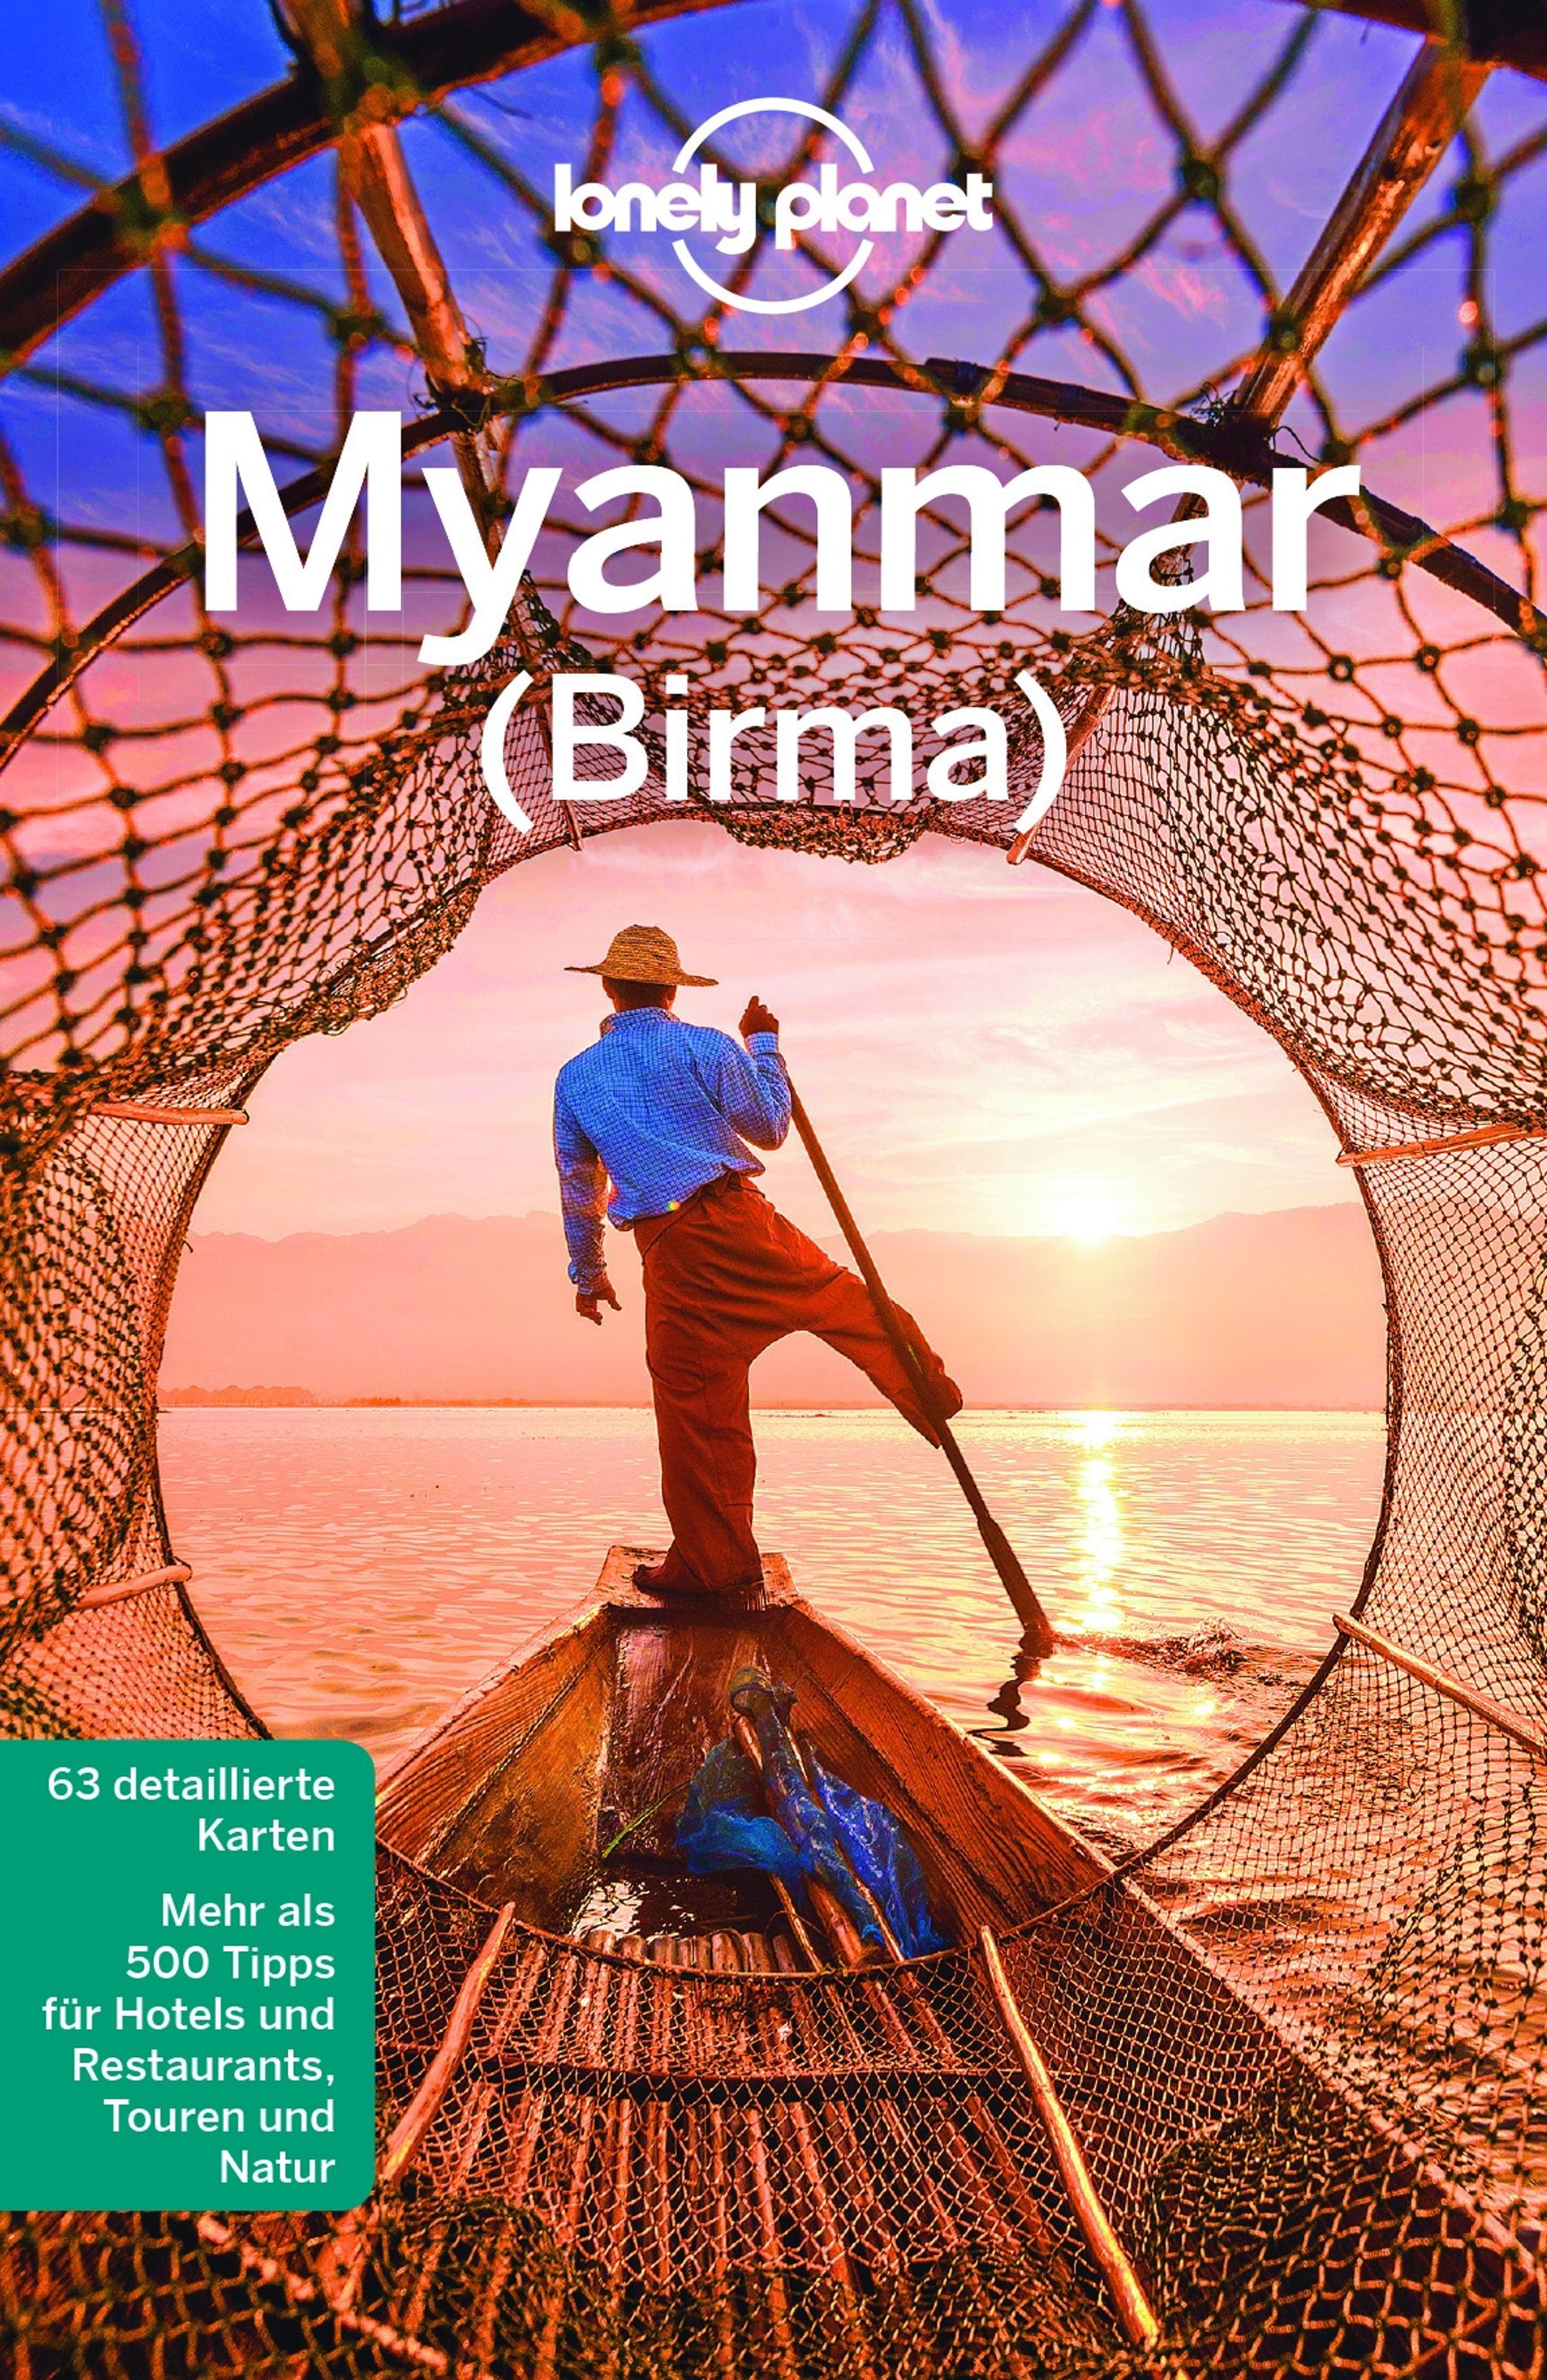 Lonely Planet Myanmar (Burma)